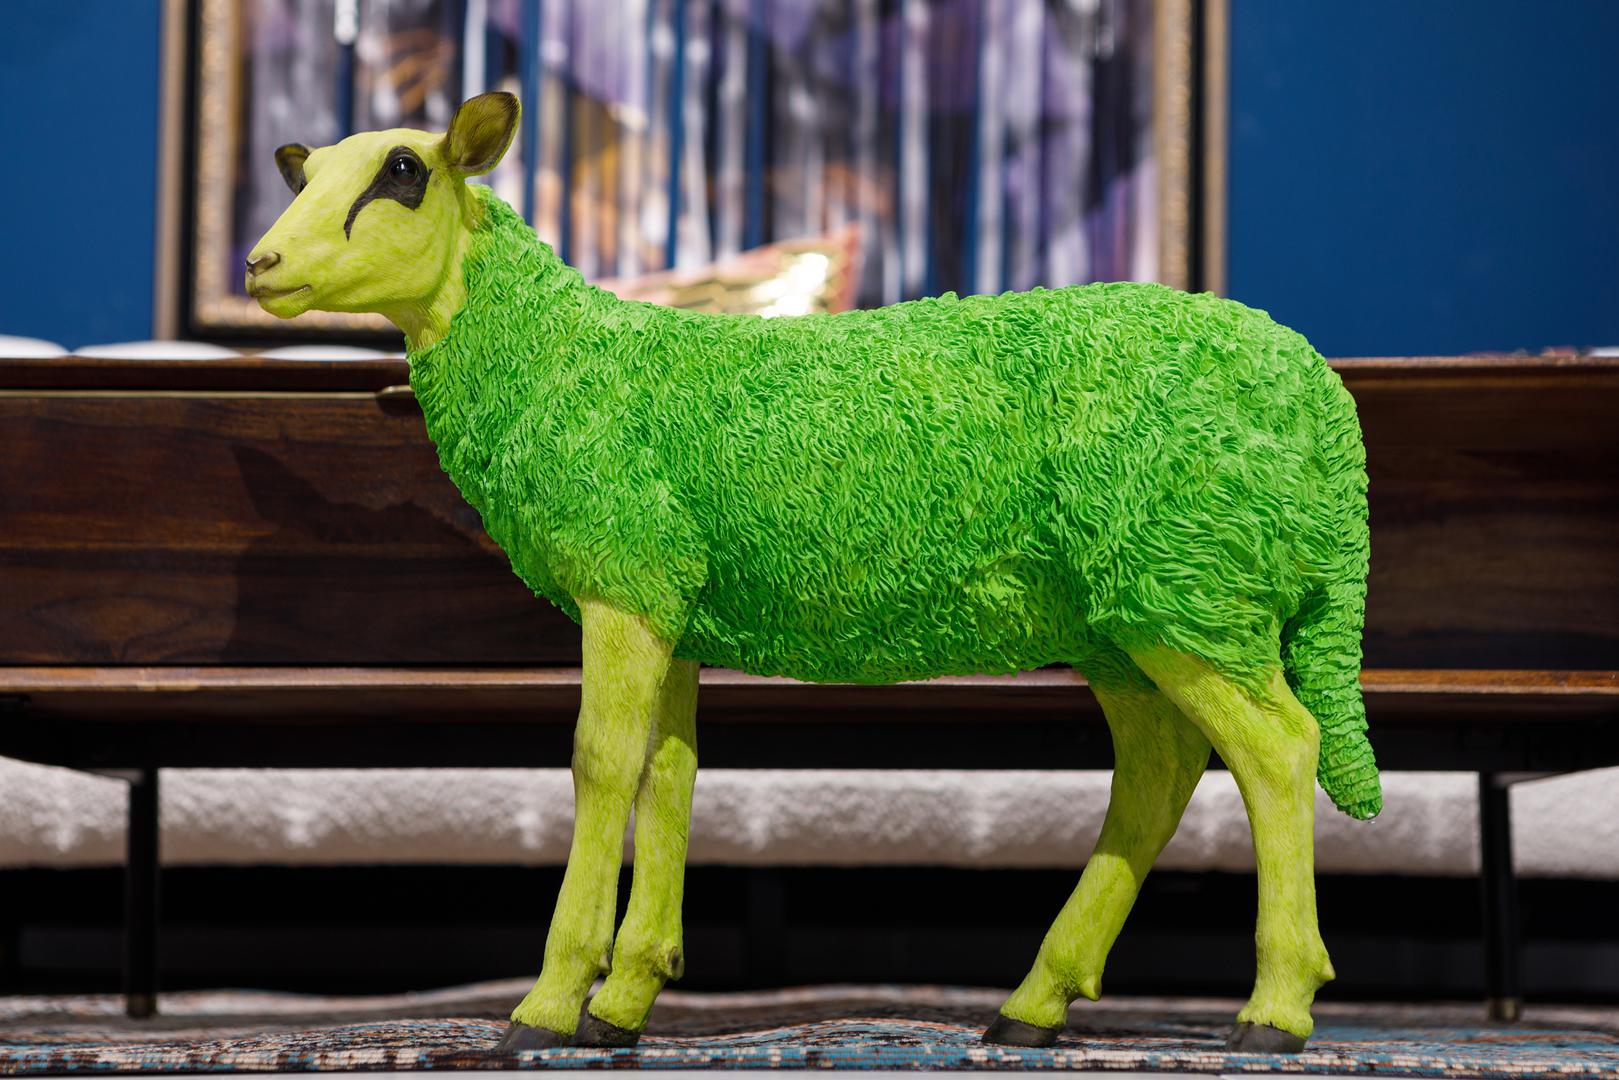 Pomalo ekscentričan detalj - zelena ovca - pravi je mamac za poglede